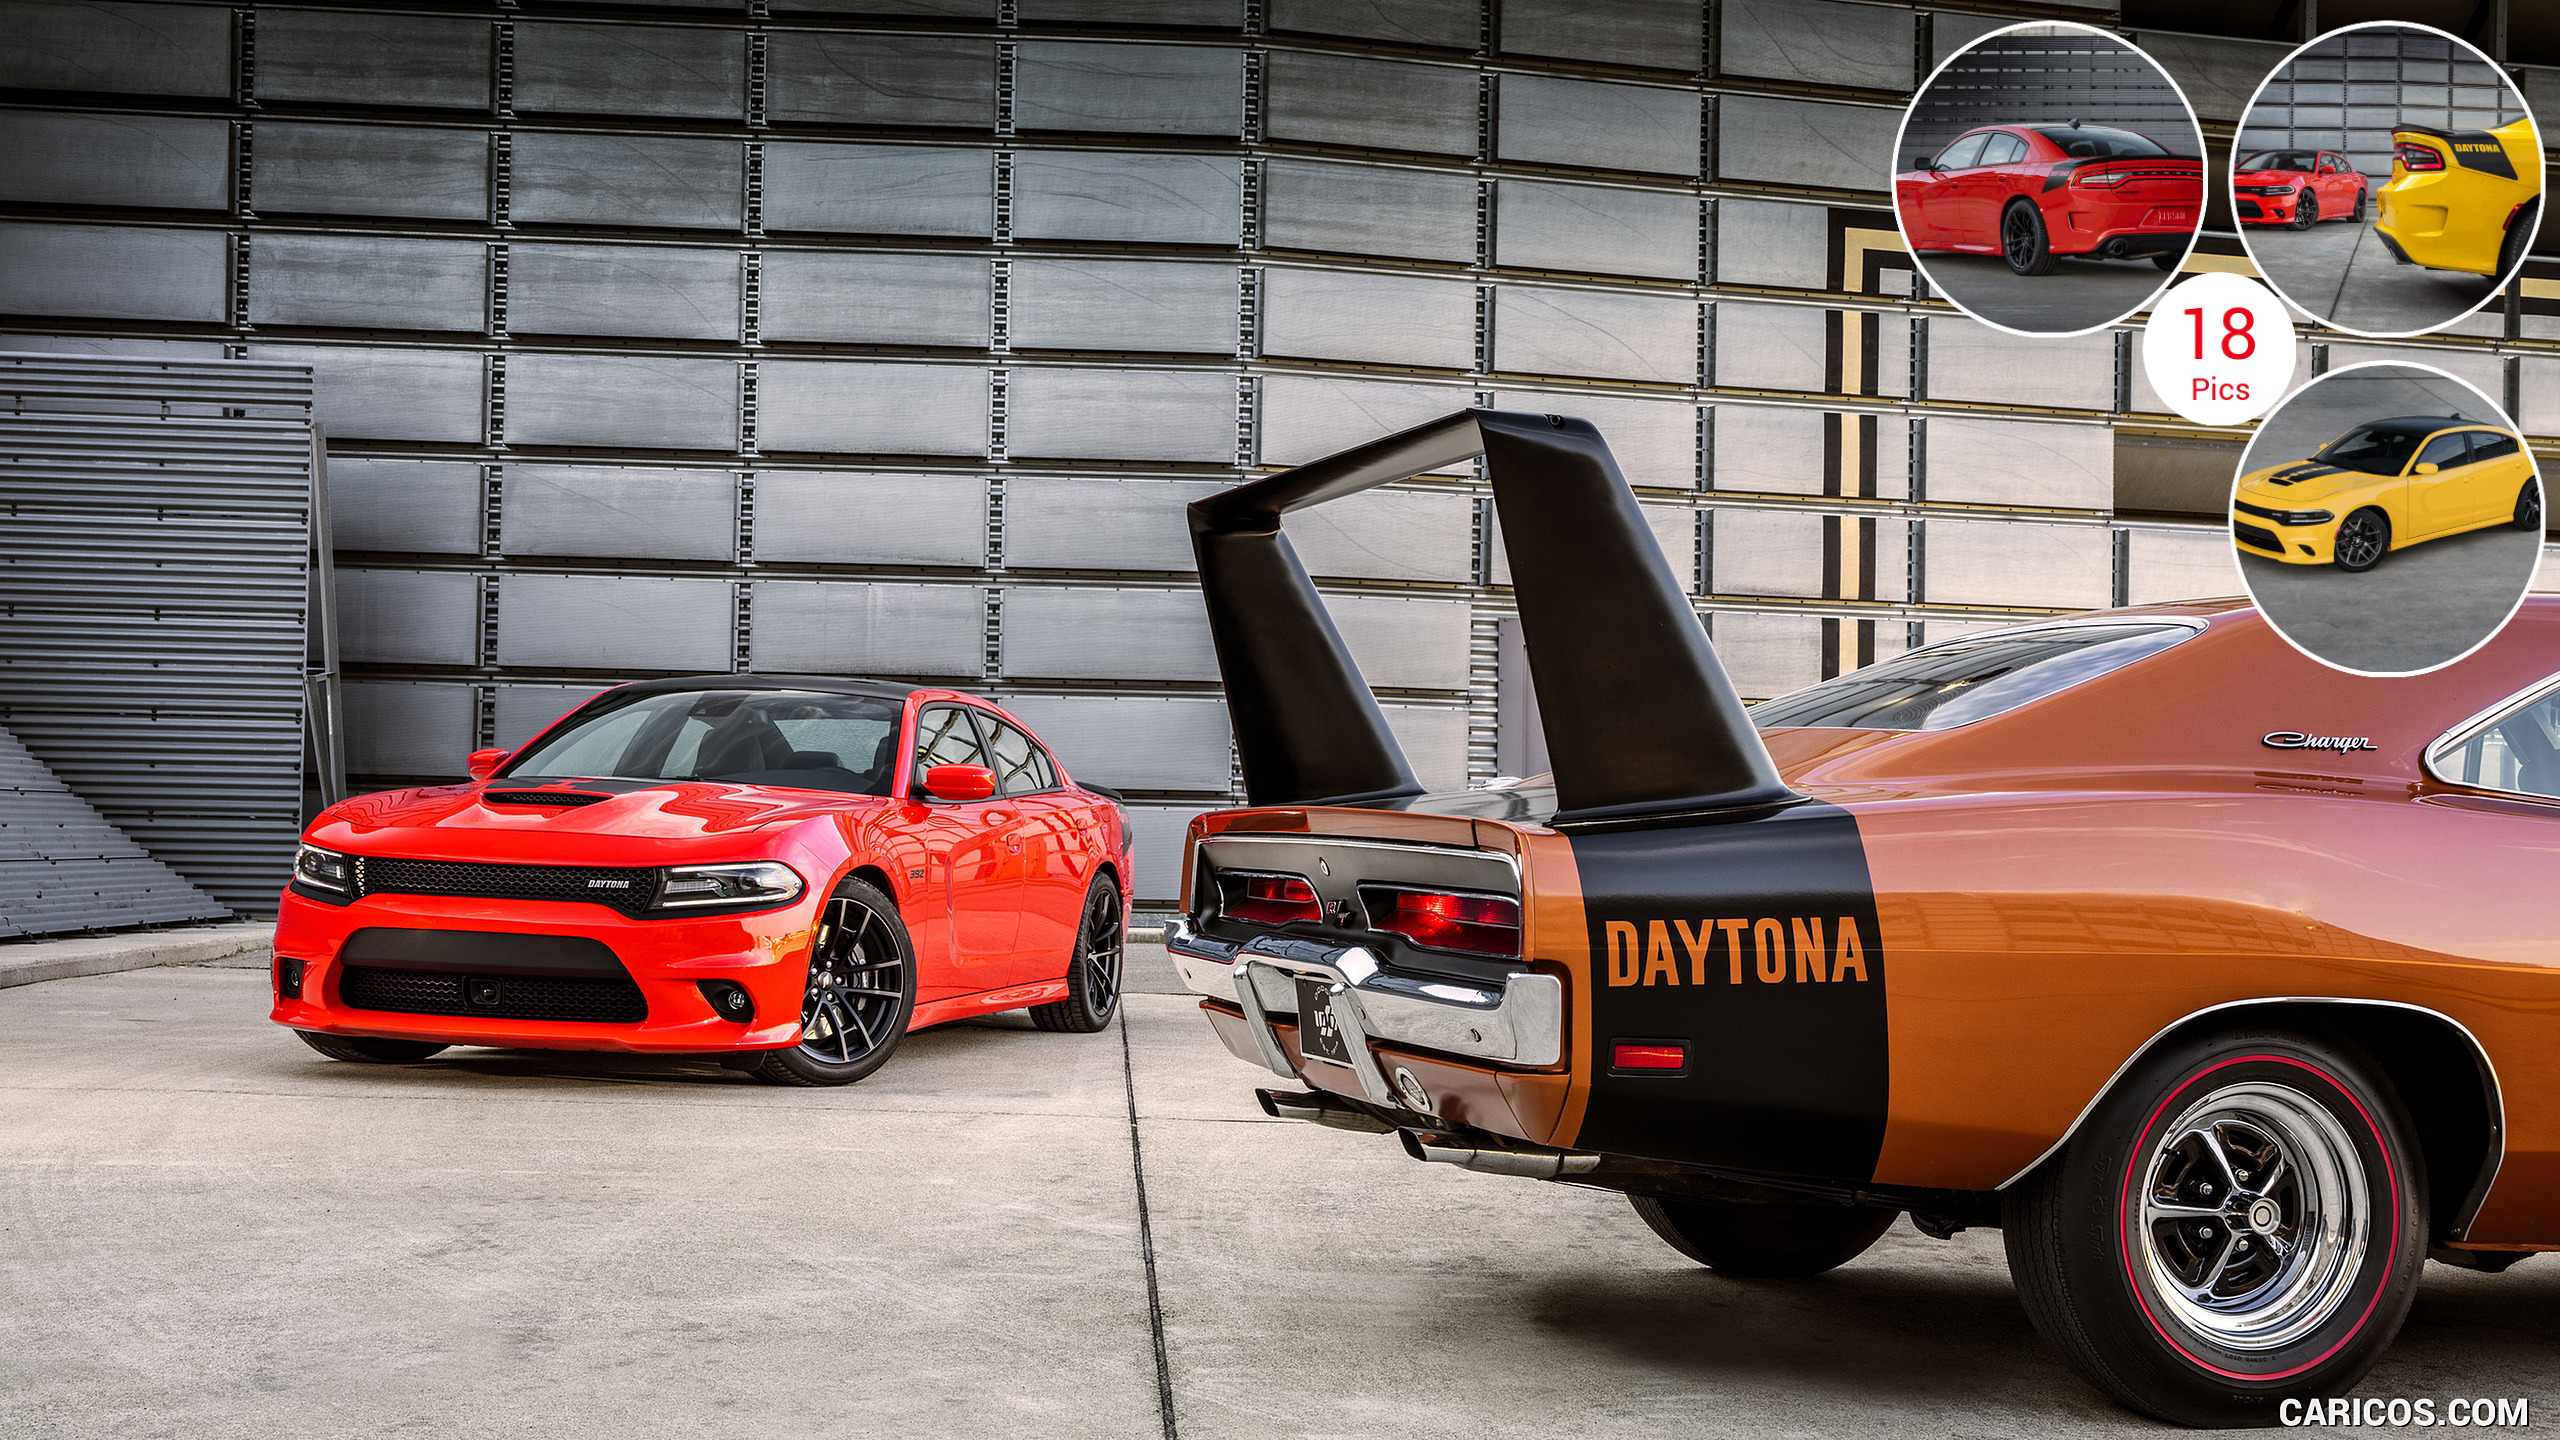 Dodge Daytona Wallpapers